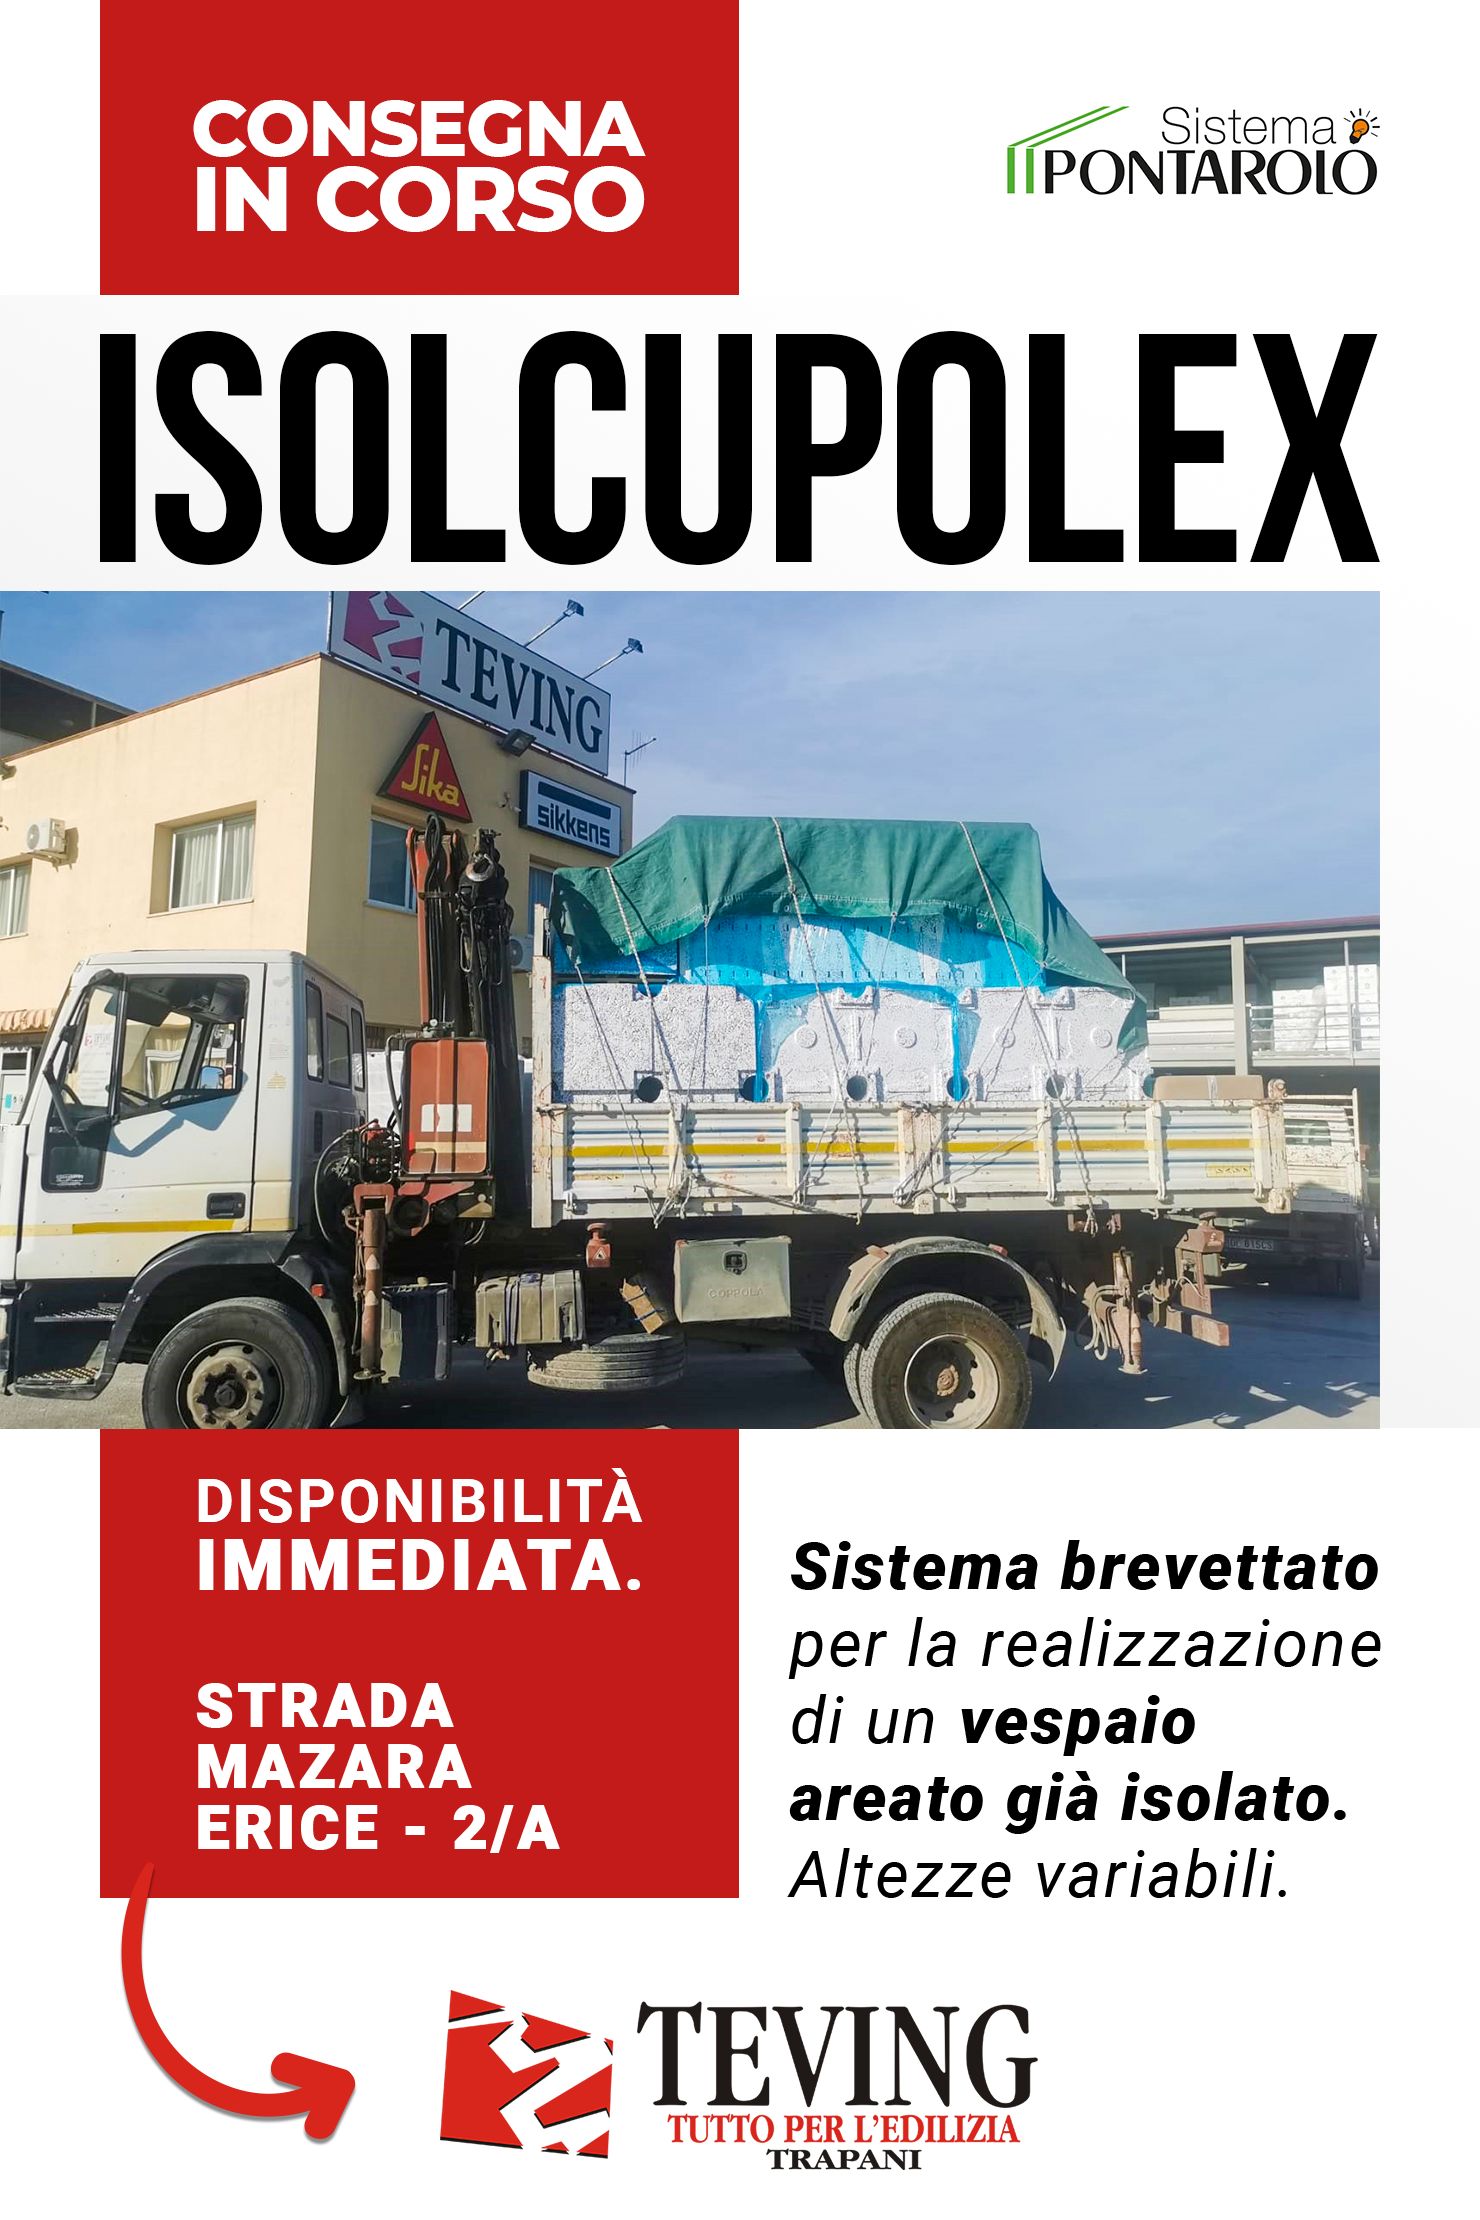 Consegna in corso _ Isolcupolex by Pontarolo